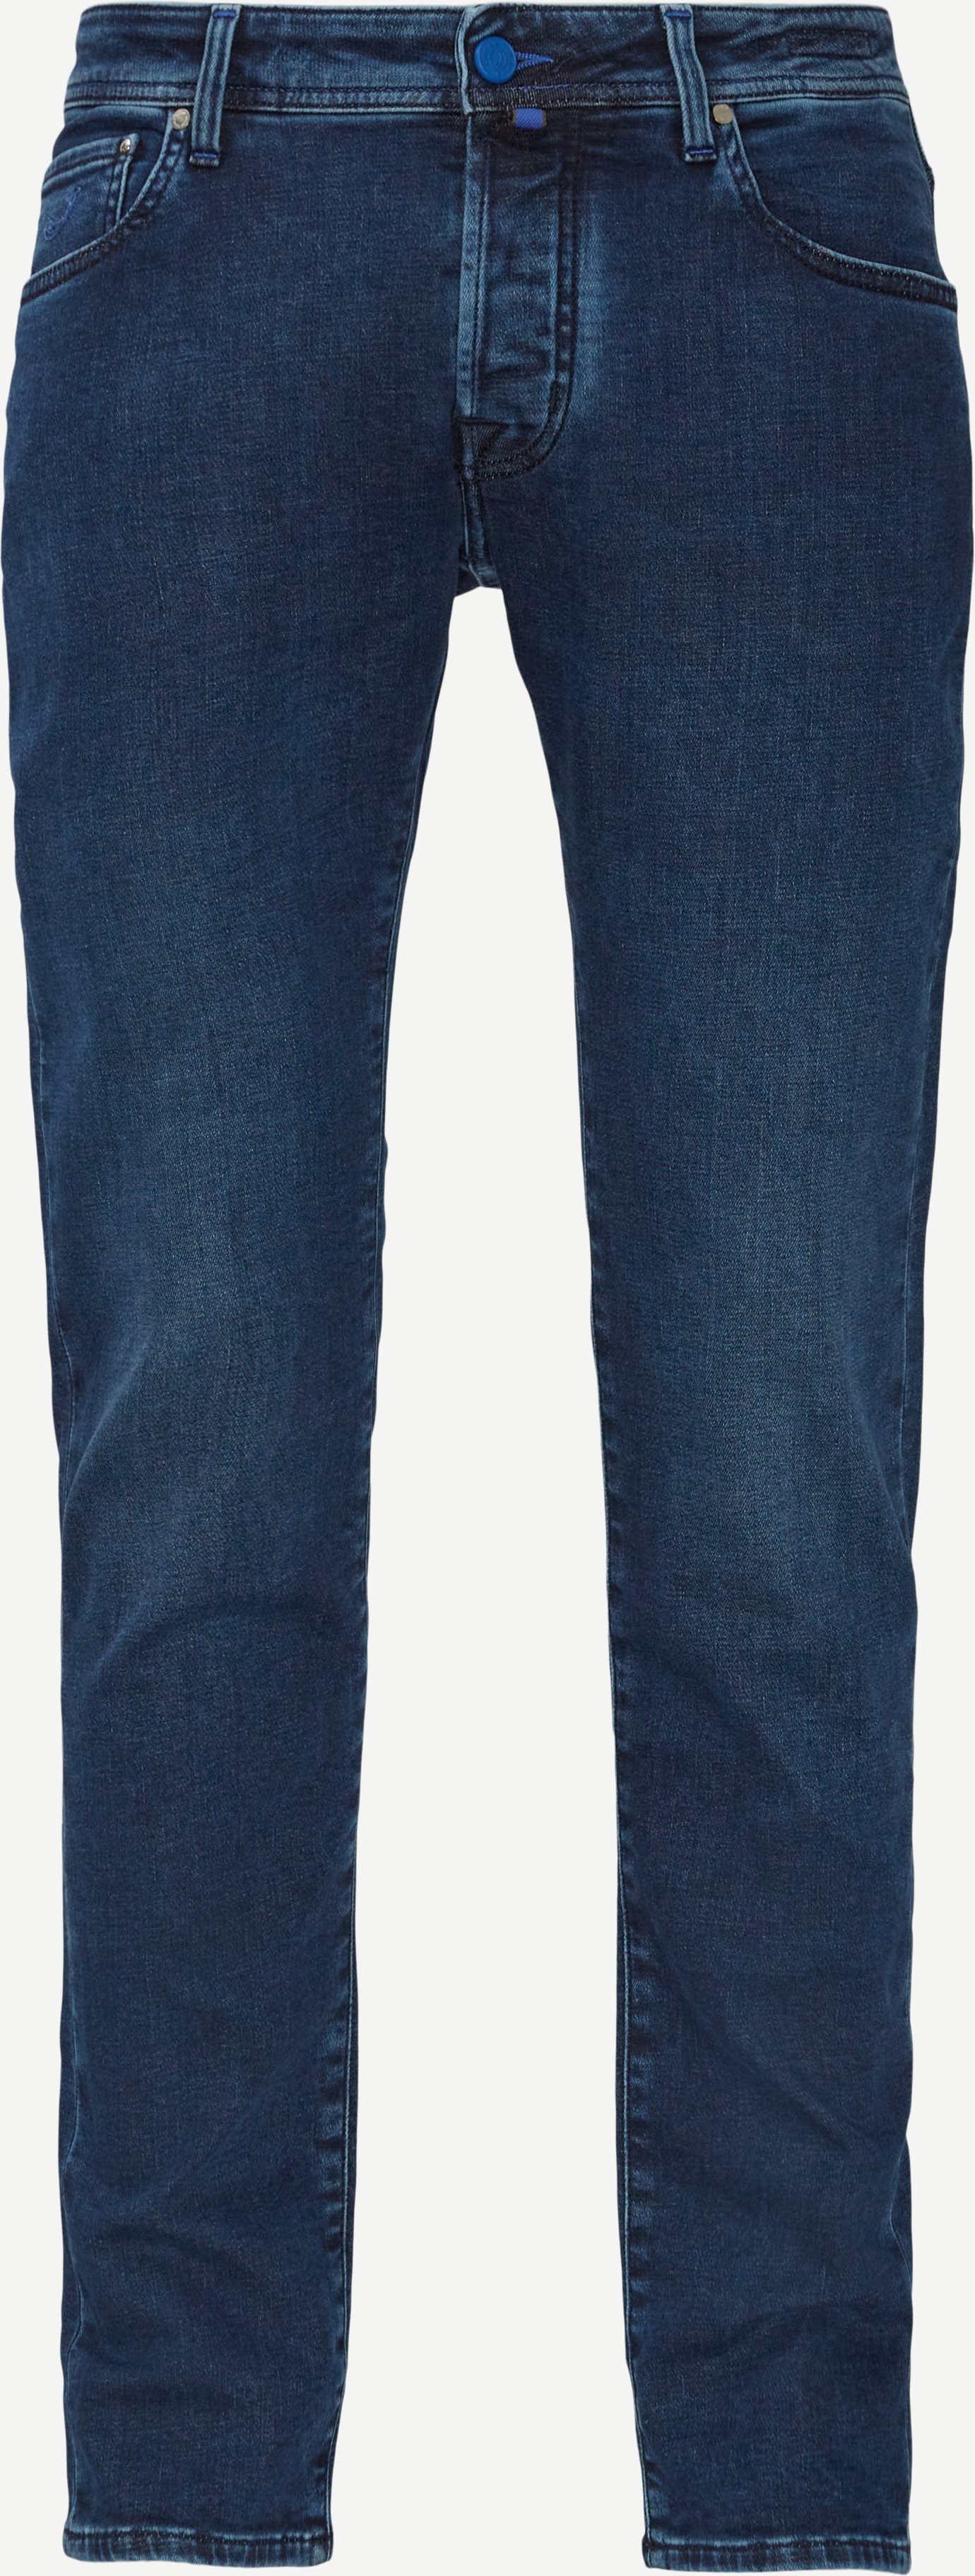 3588 Nick Denim Jeans - Jeans - Slim fit - Denim